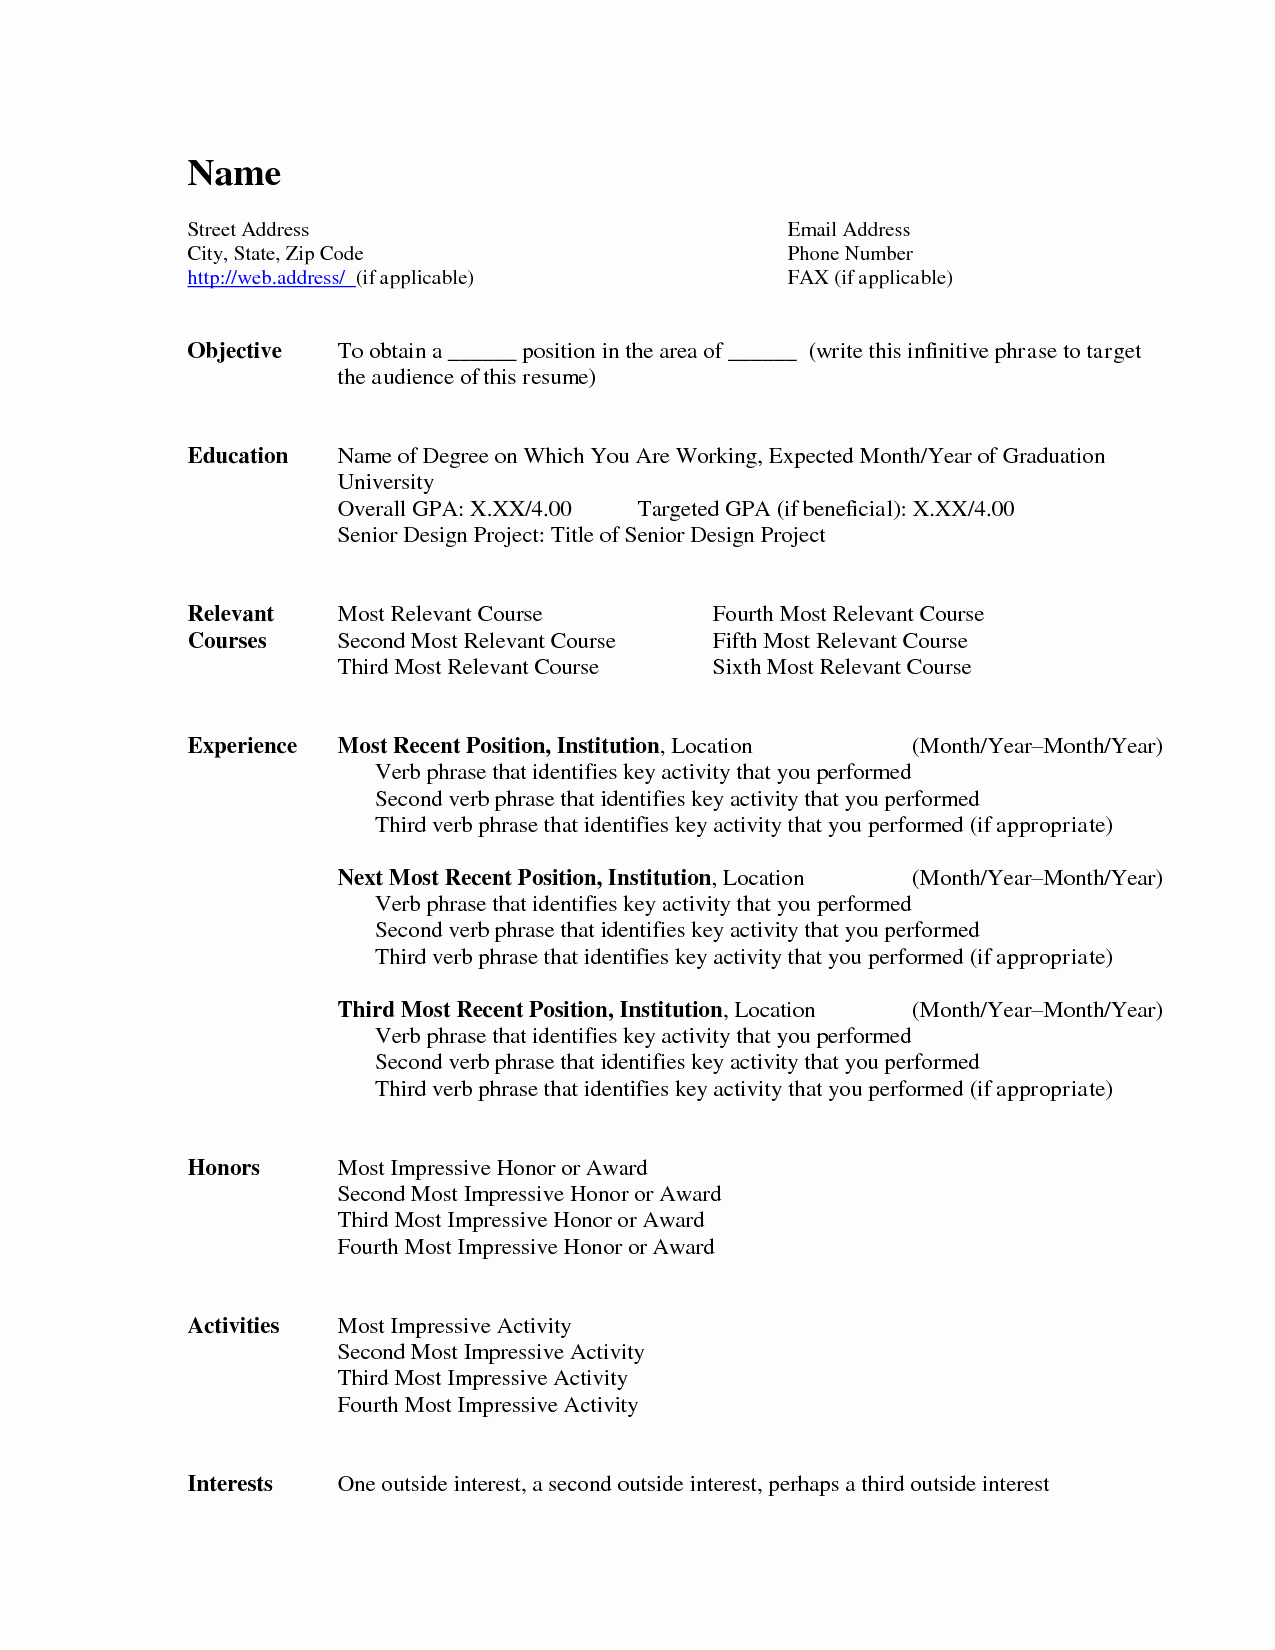 Microsoft Office Word Resume Templates Inspirational is there A Resume Resumes Microsoft Word Popular Resume